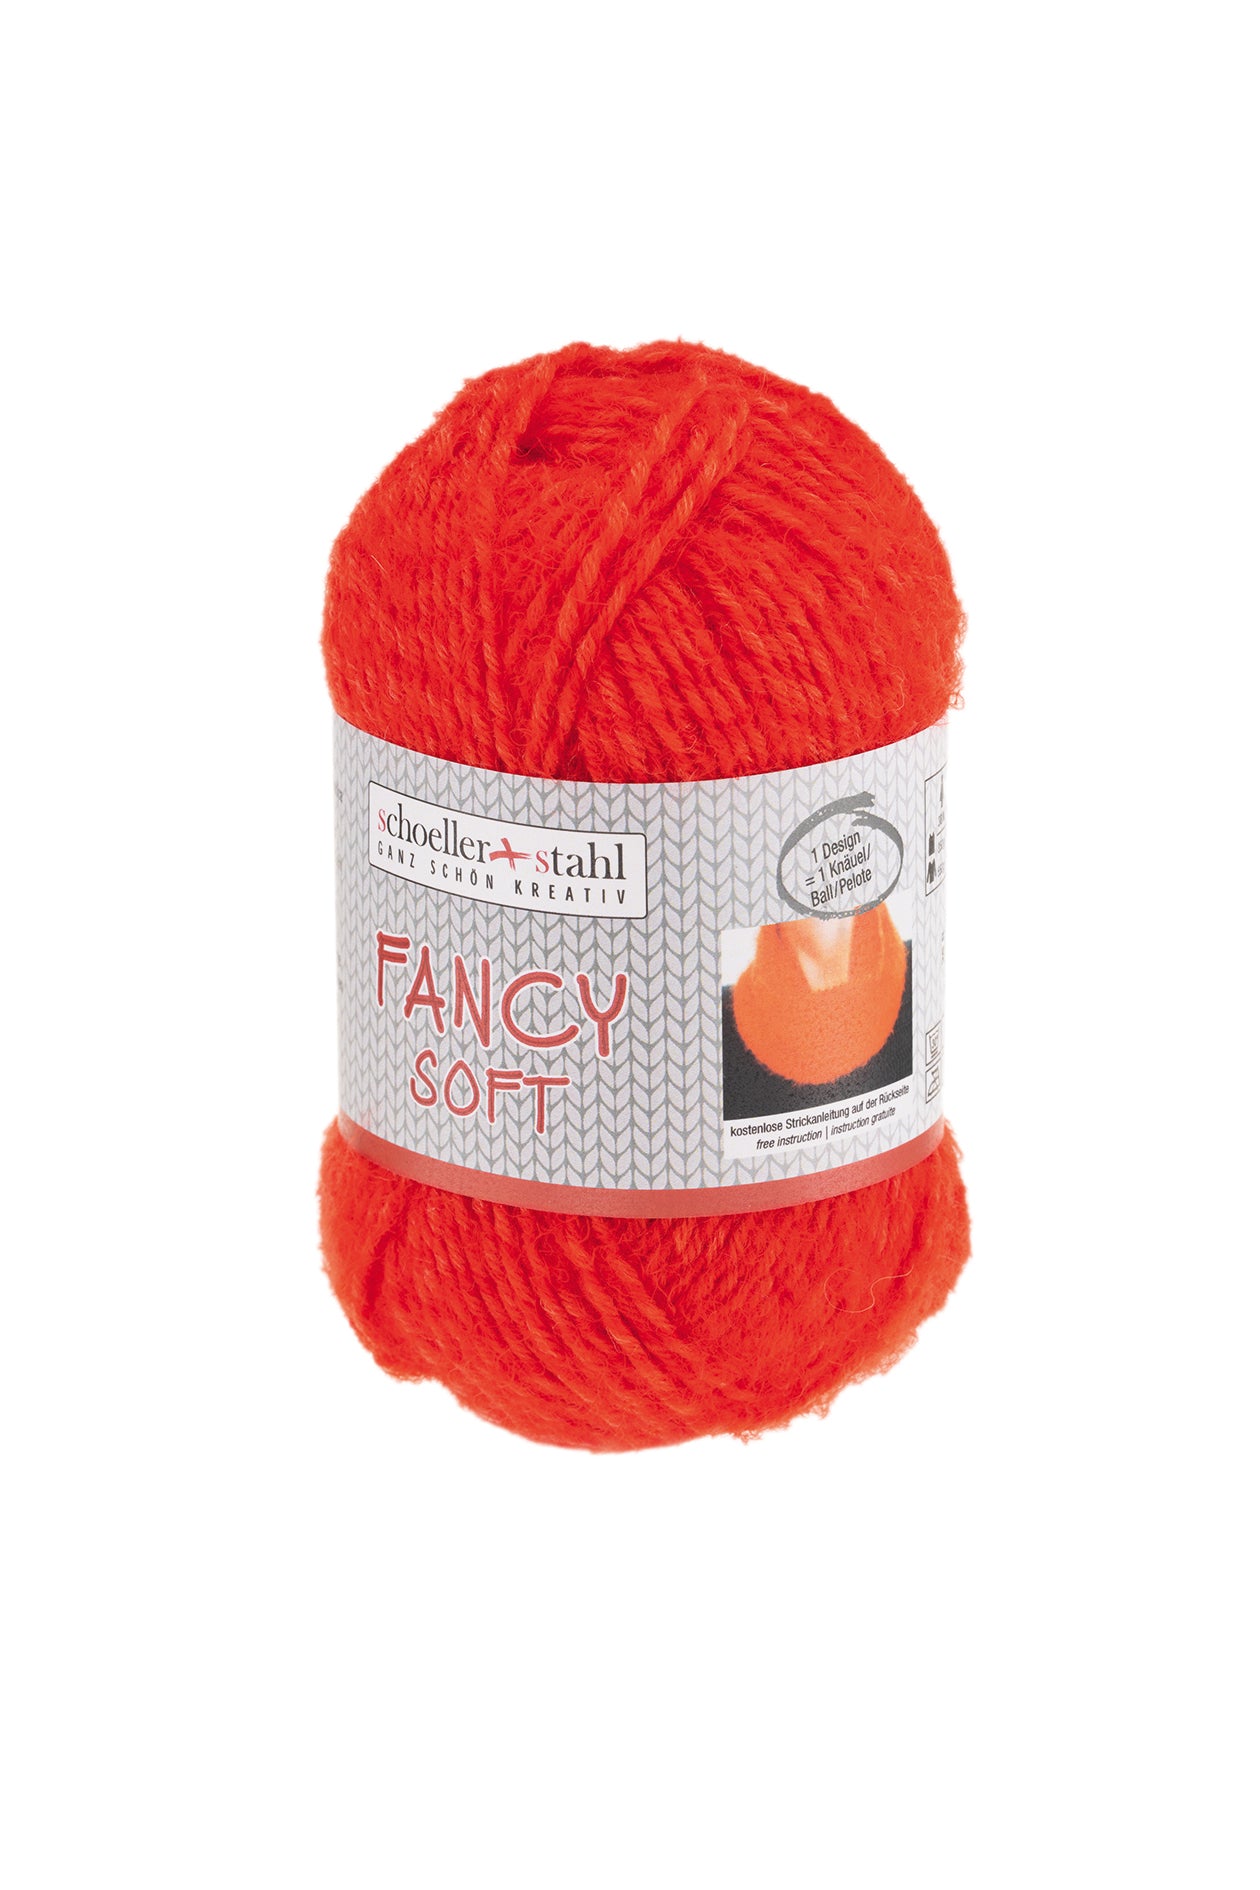 Fancy Soft  50g, 90233, Farbe 7, rot